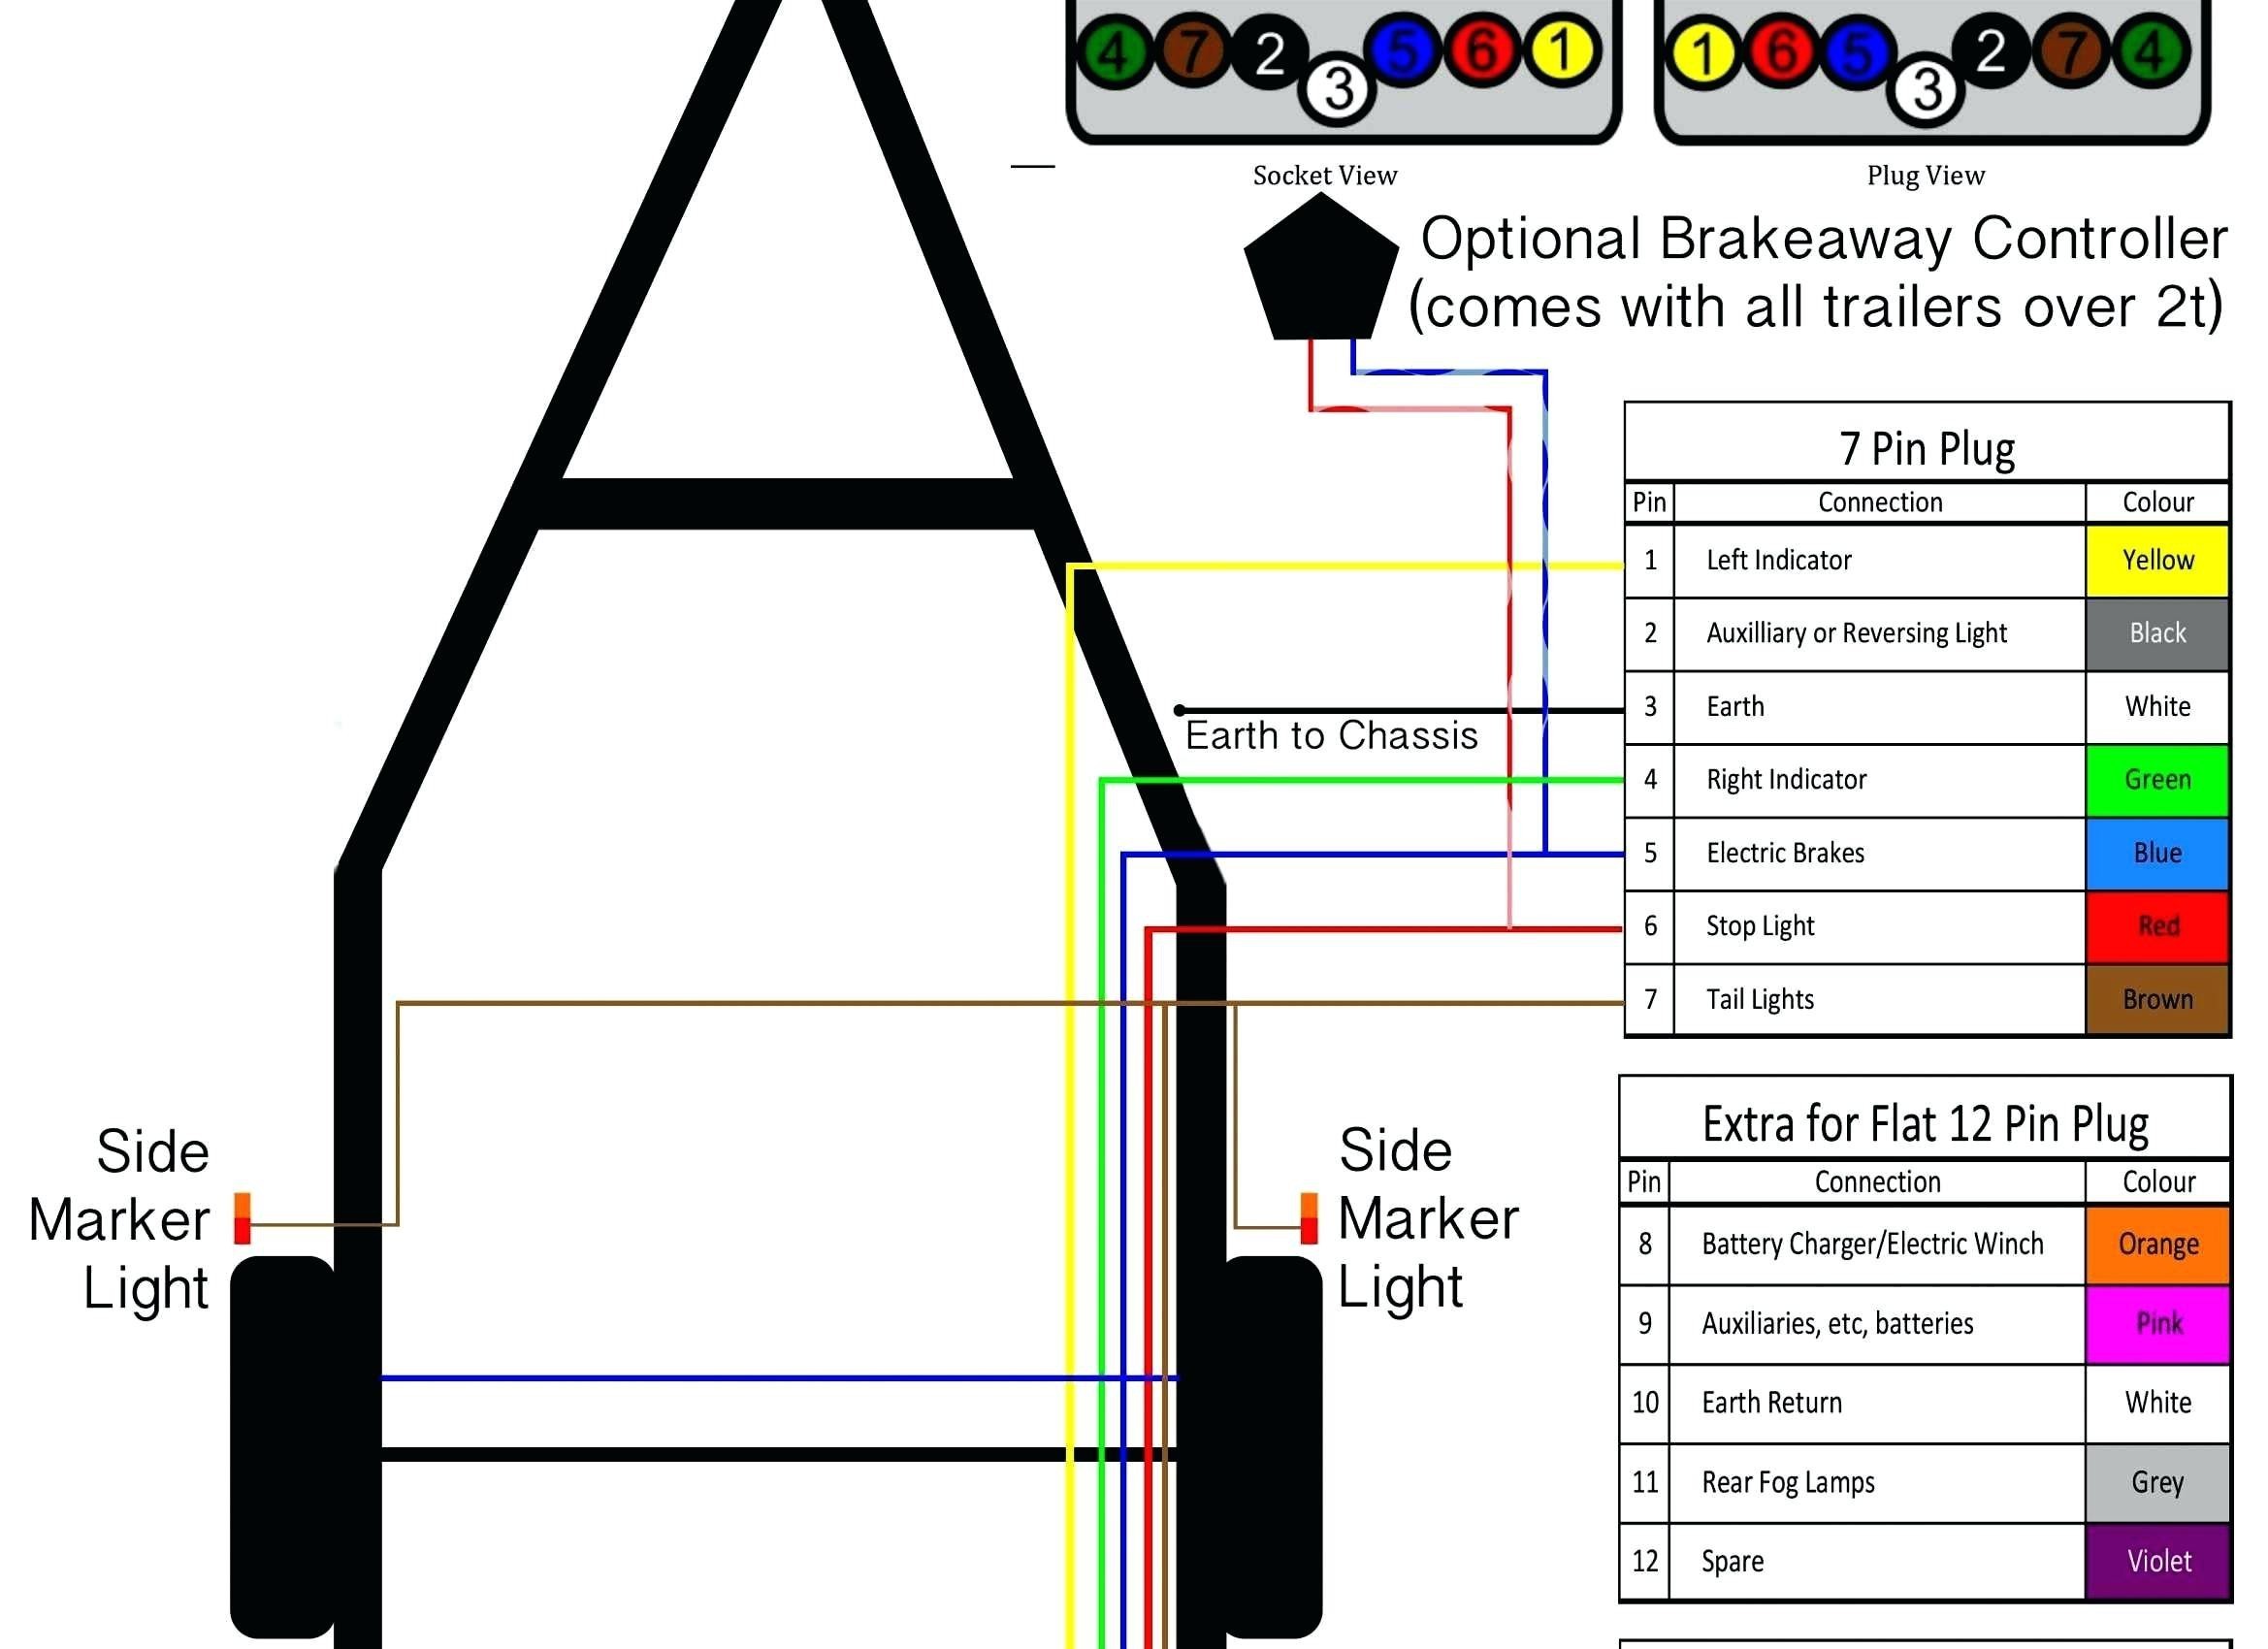 Wiring Diagram For Trailer Light Plug Save 4 Wire Trailer Light Diagram Fresh Pj Trailer Wiring Diagram Car 6